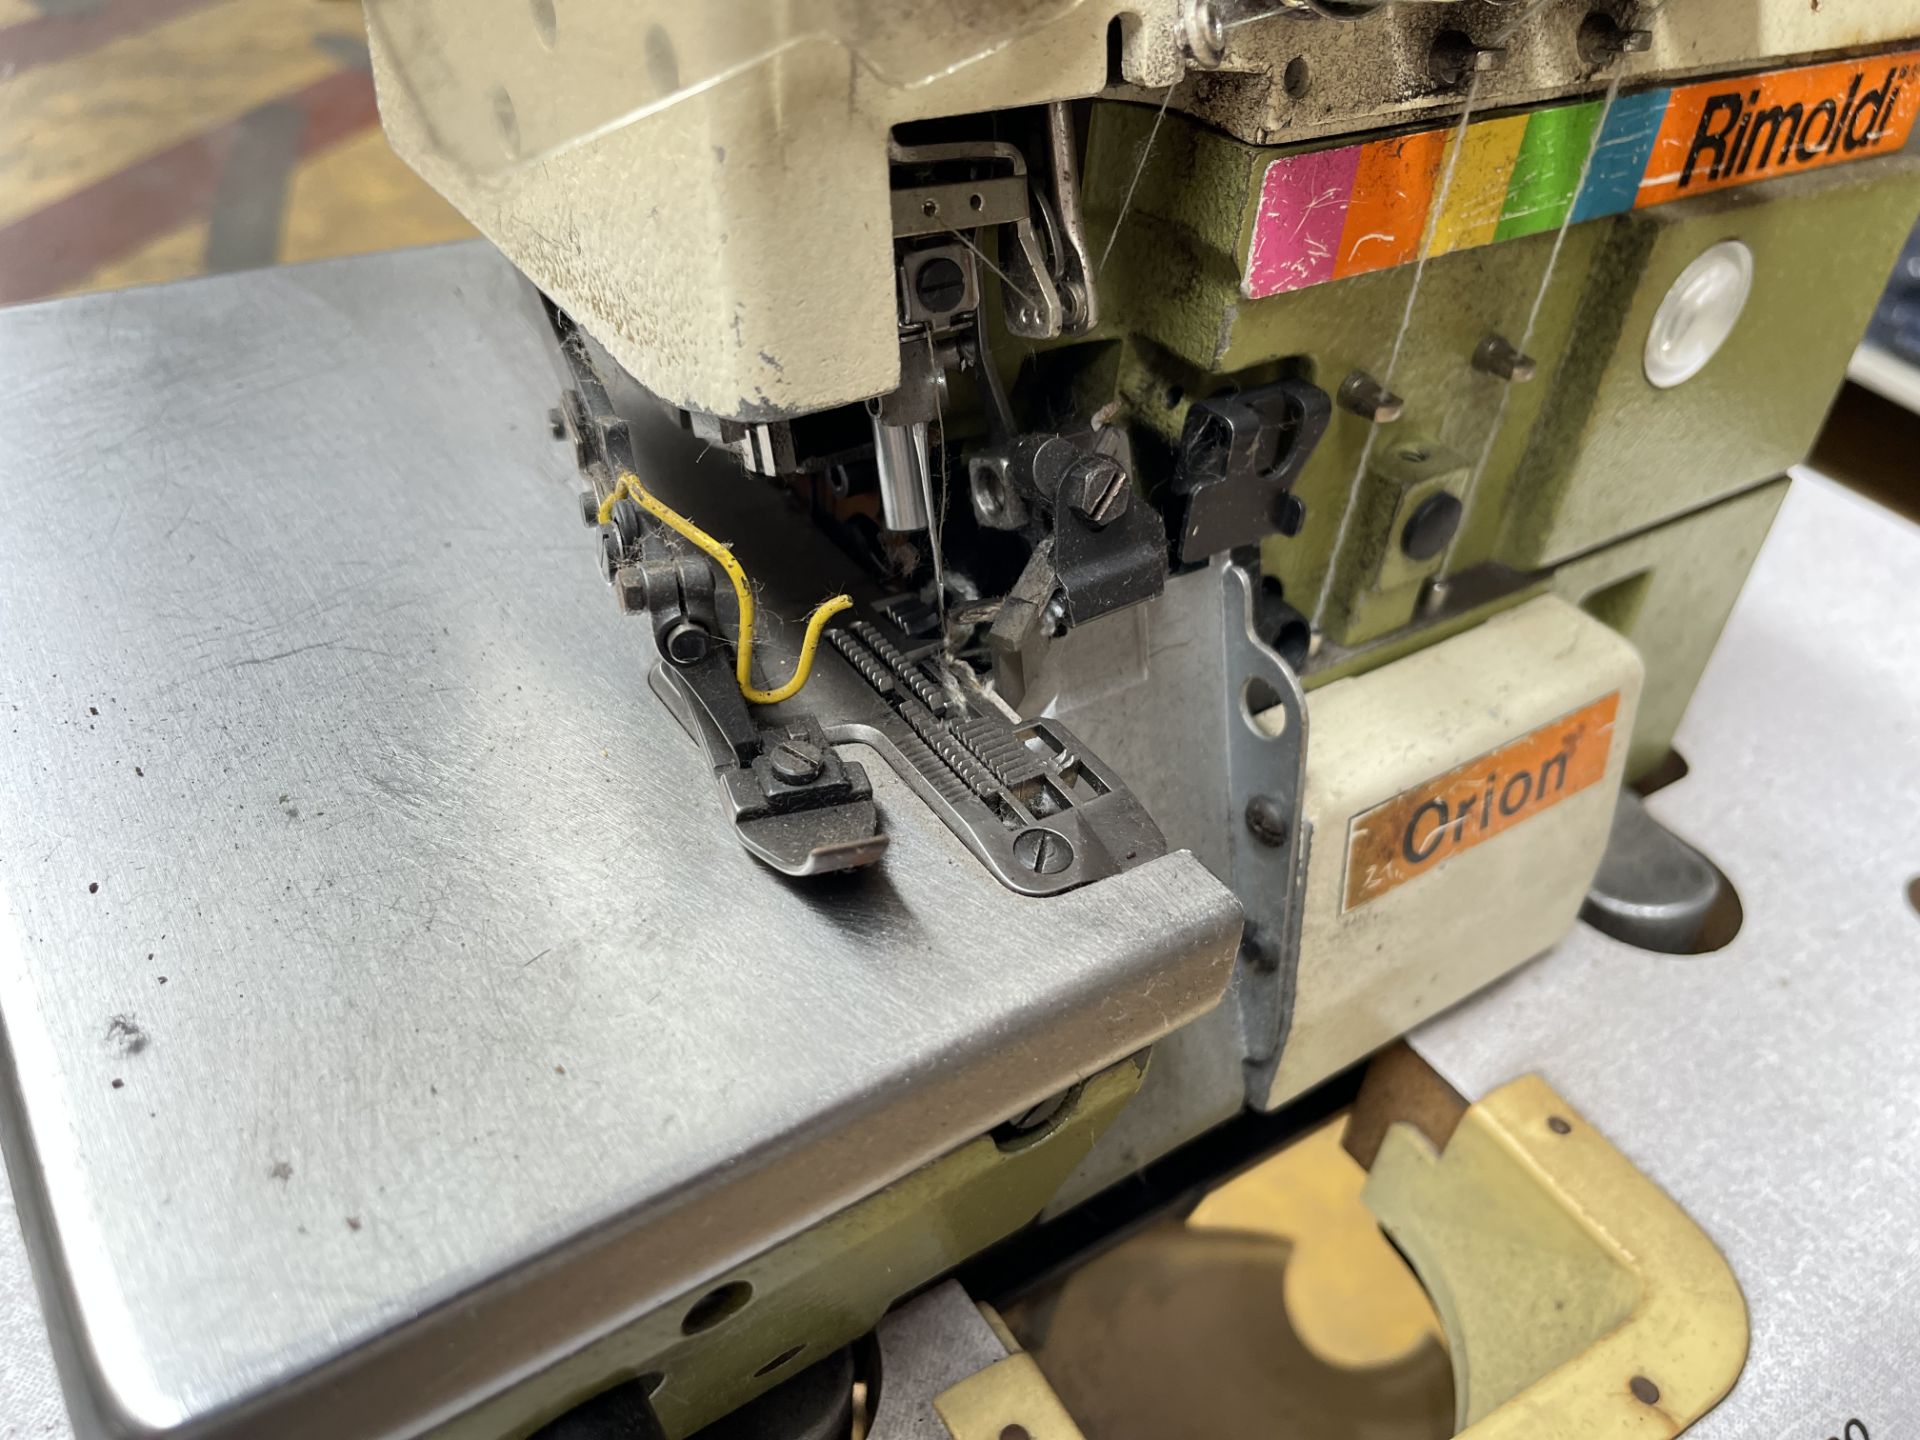 Rimoldi 627-00-2MD-02/135-82 Overlocker Sewing machine. S/No 559 565 - Image 5 of 8